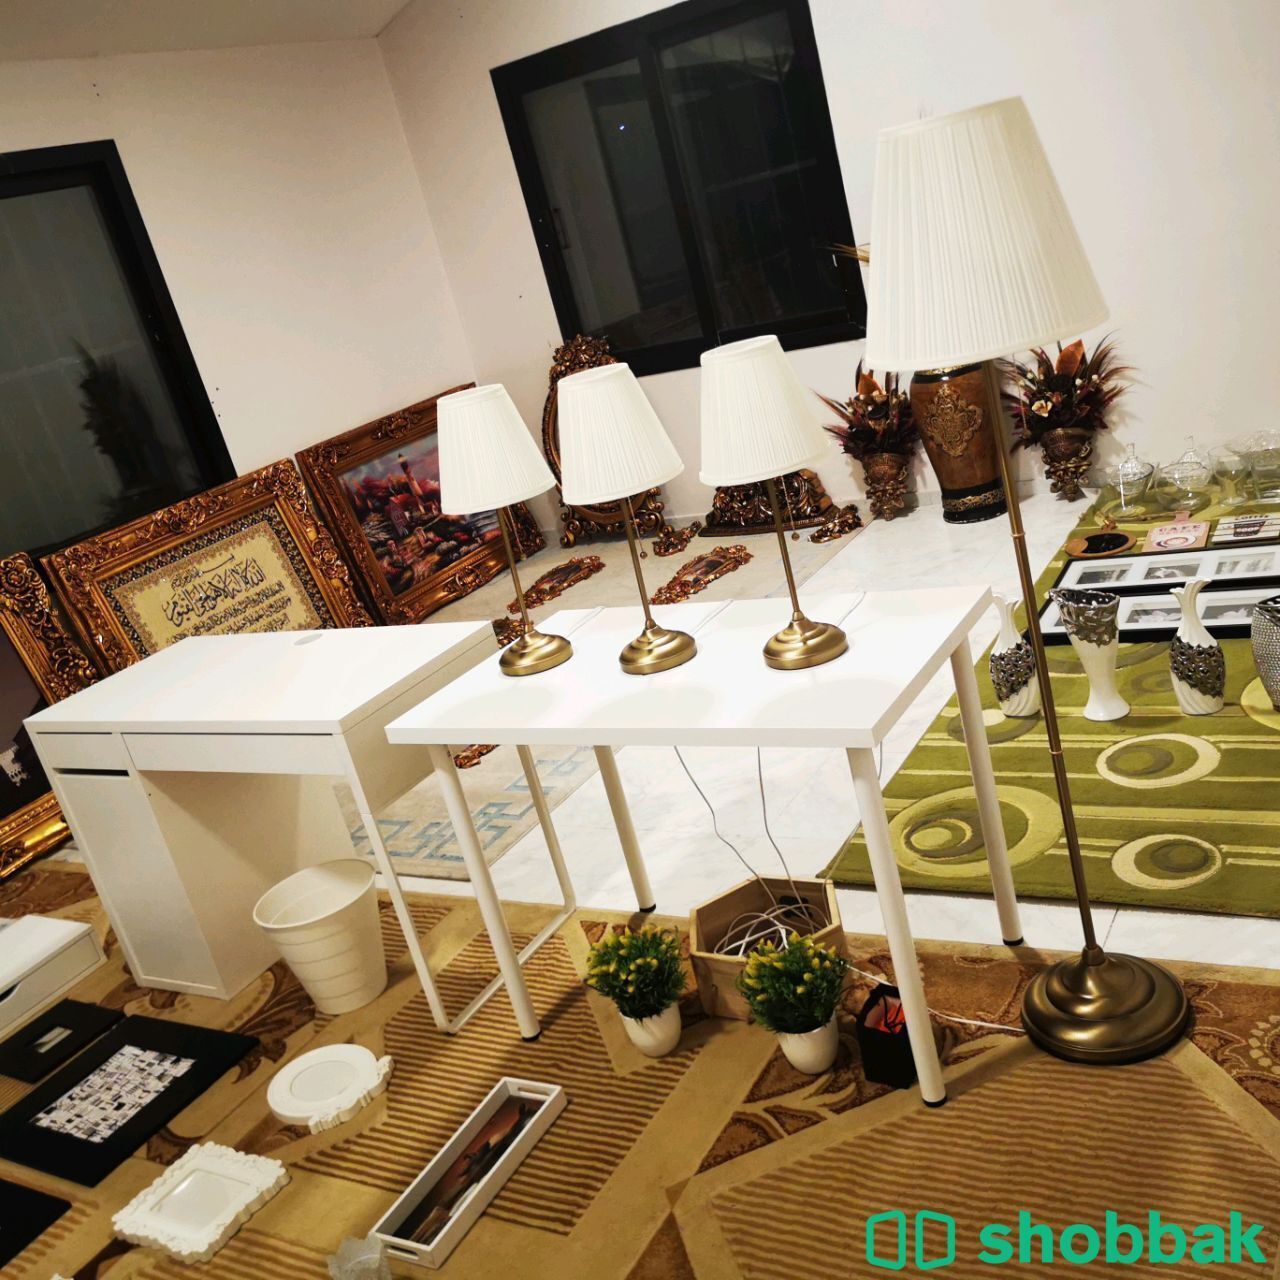 تحف ولوحات  Shobbak Saudi Arabia